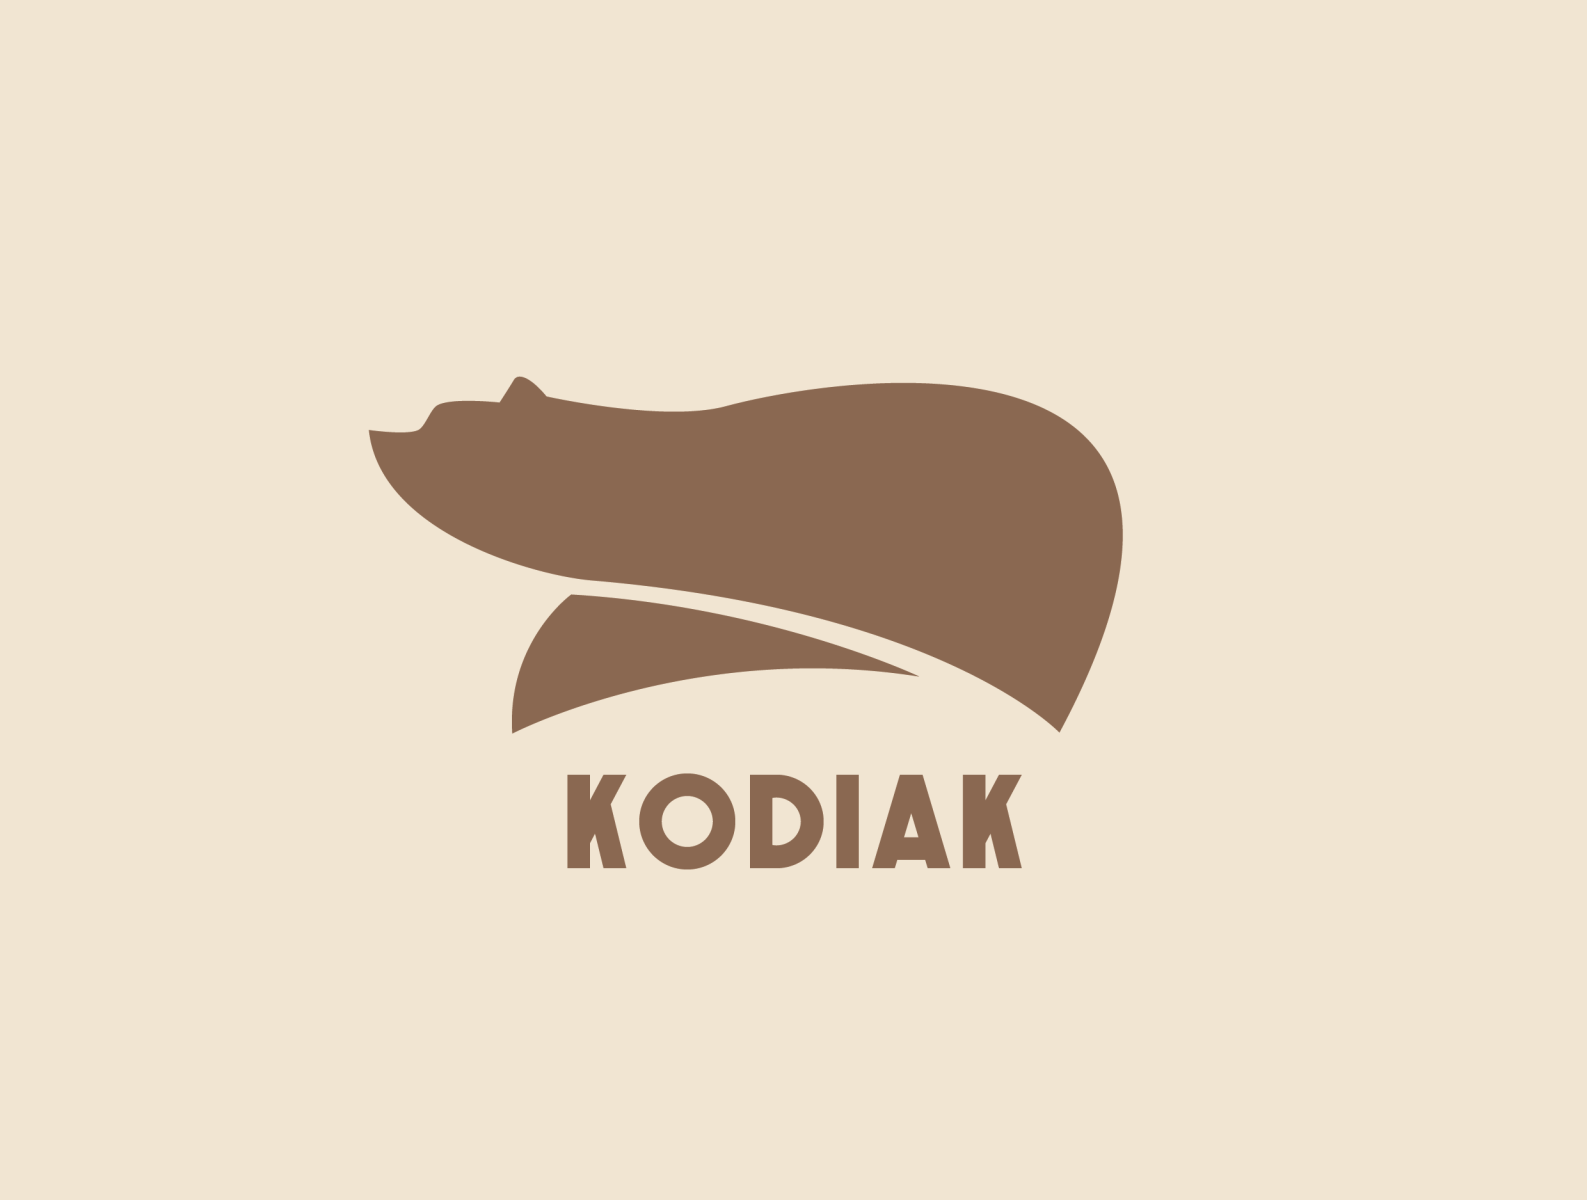 Kodiak Logo Design by Adam Parks on Dribbble